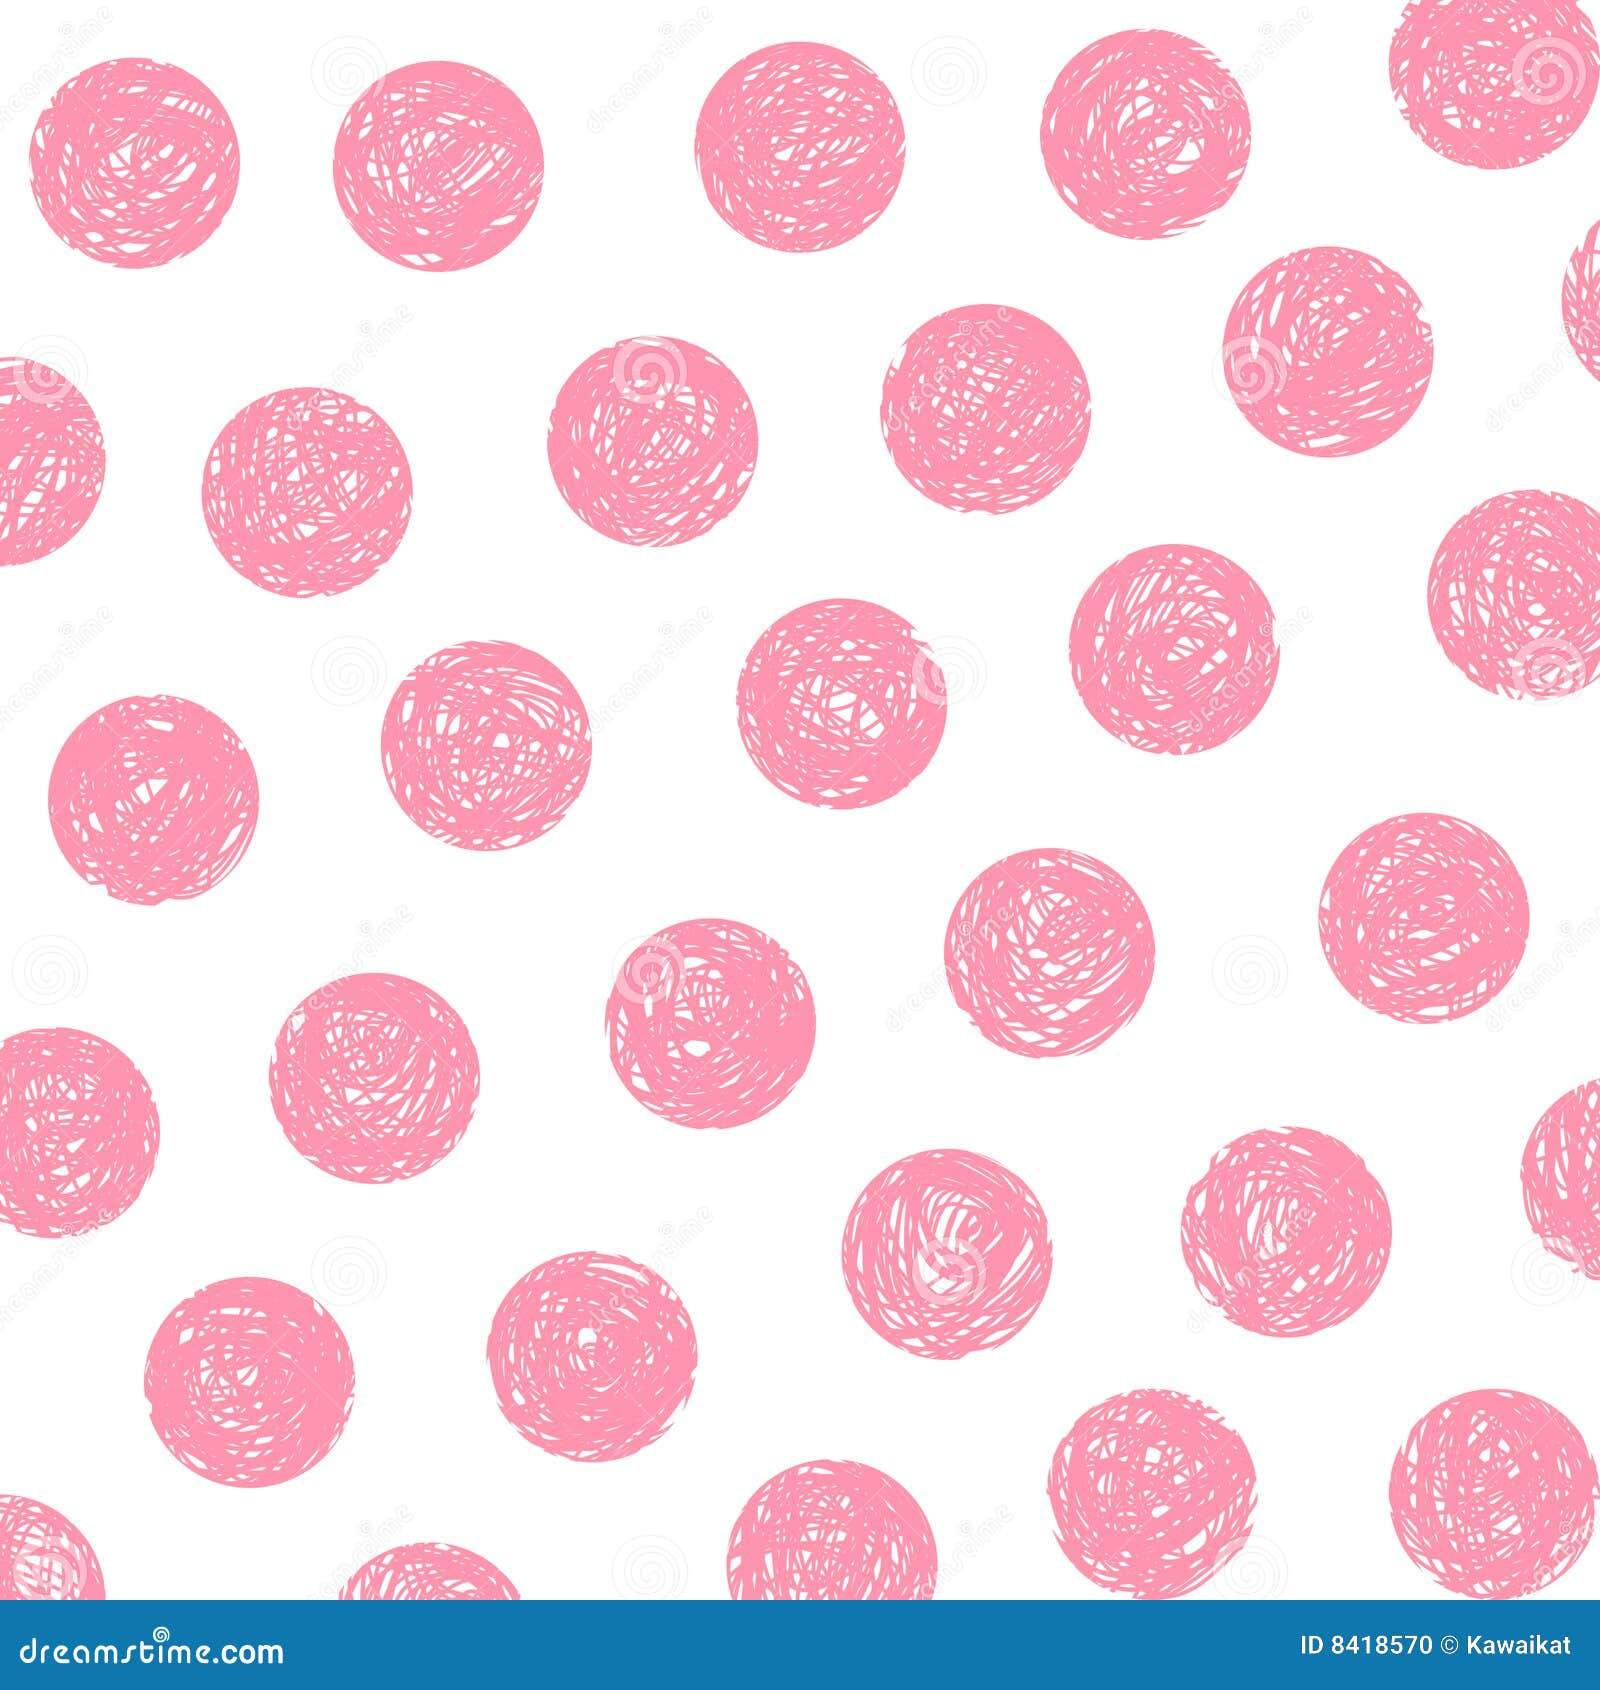 Pink polka dots stock illustration. Illustration of dots - 8418570